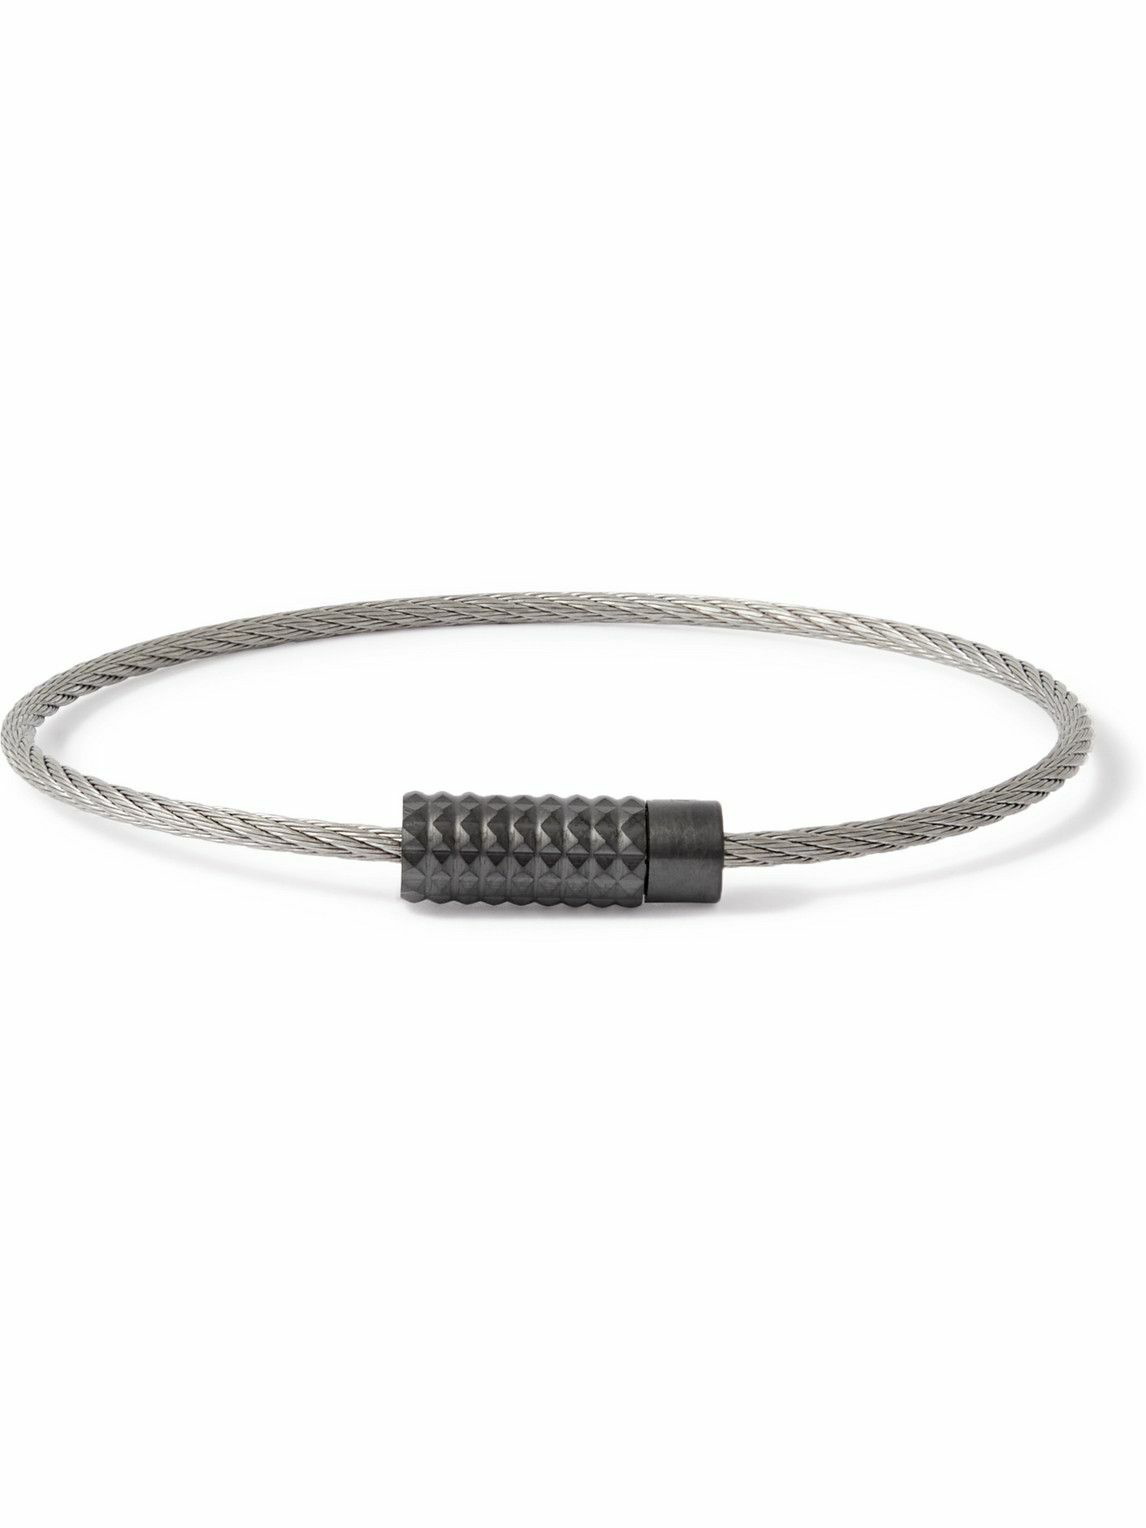 le gramme cable bracelet 9g SV925 20cm珍しい9gの20cmです